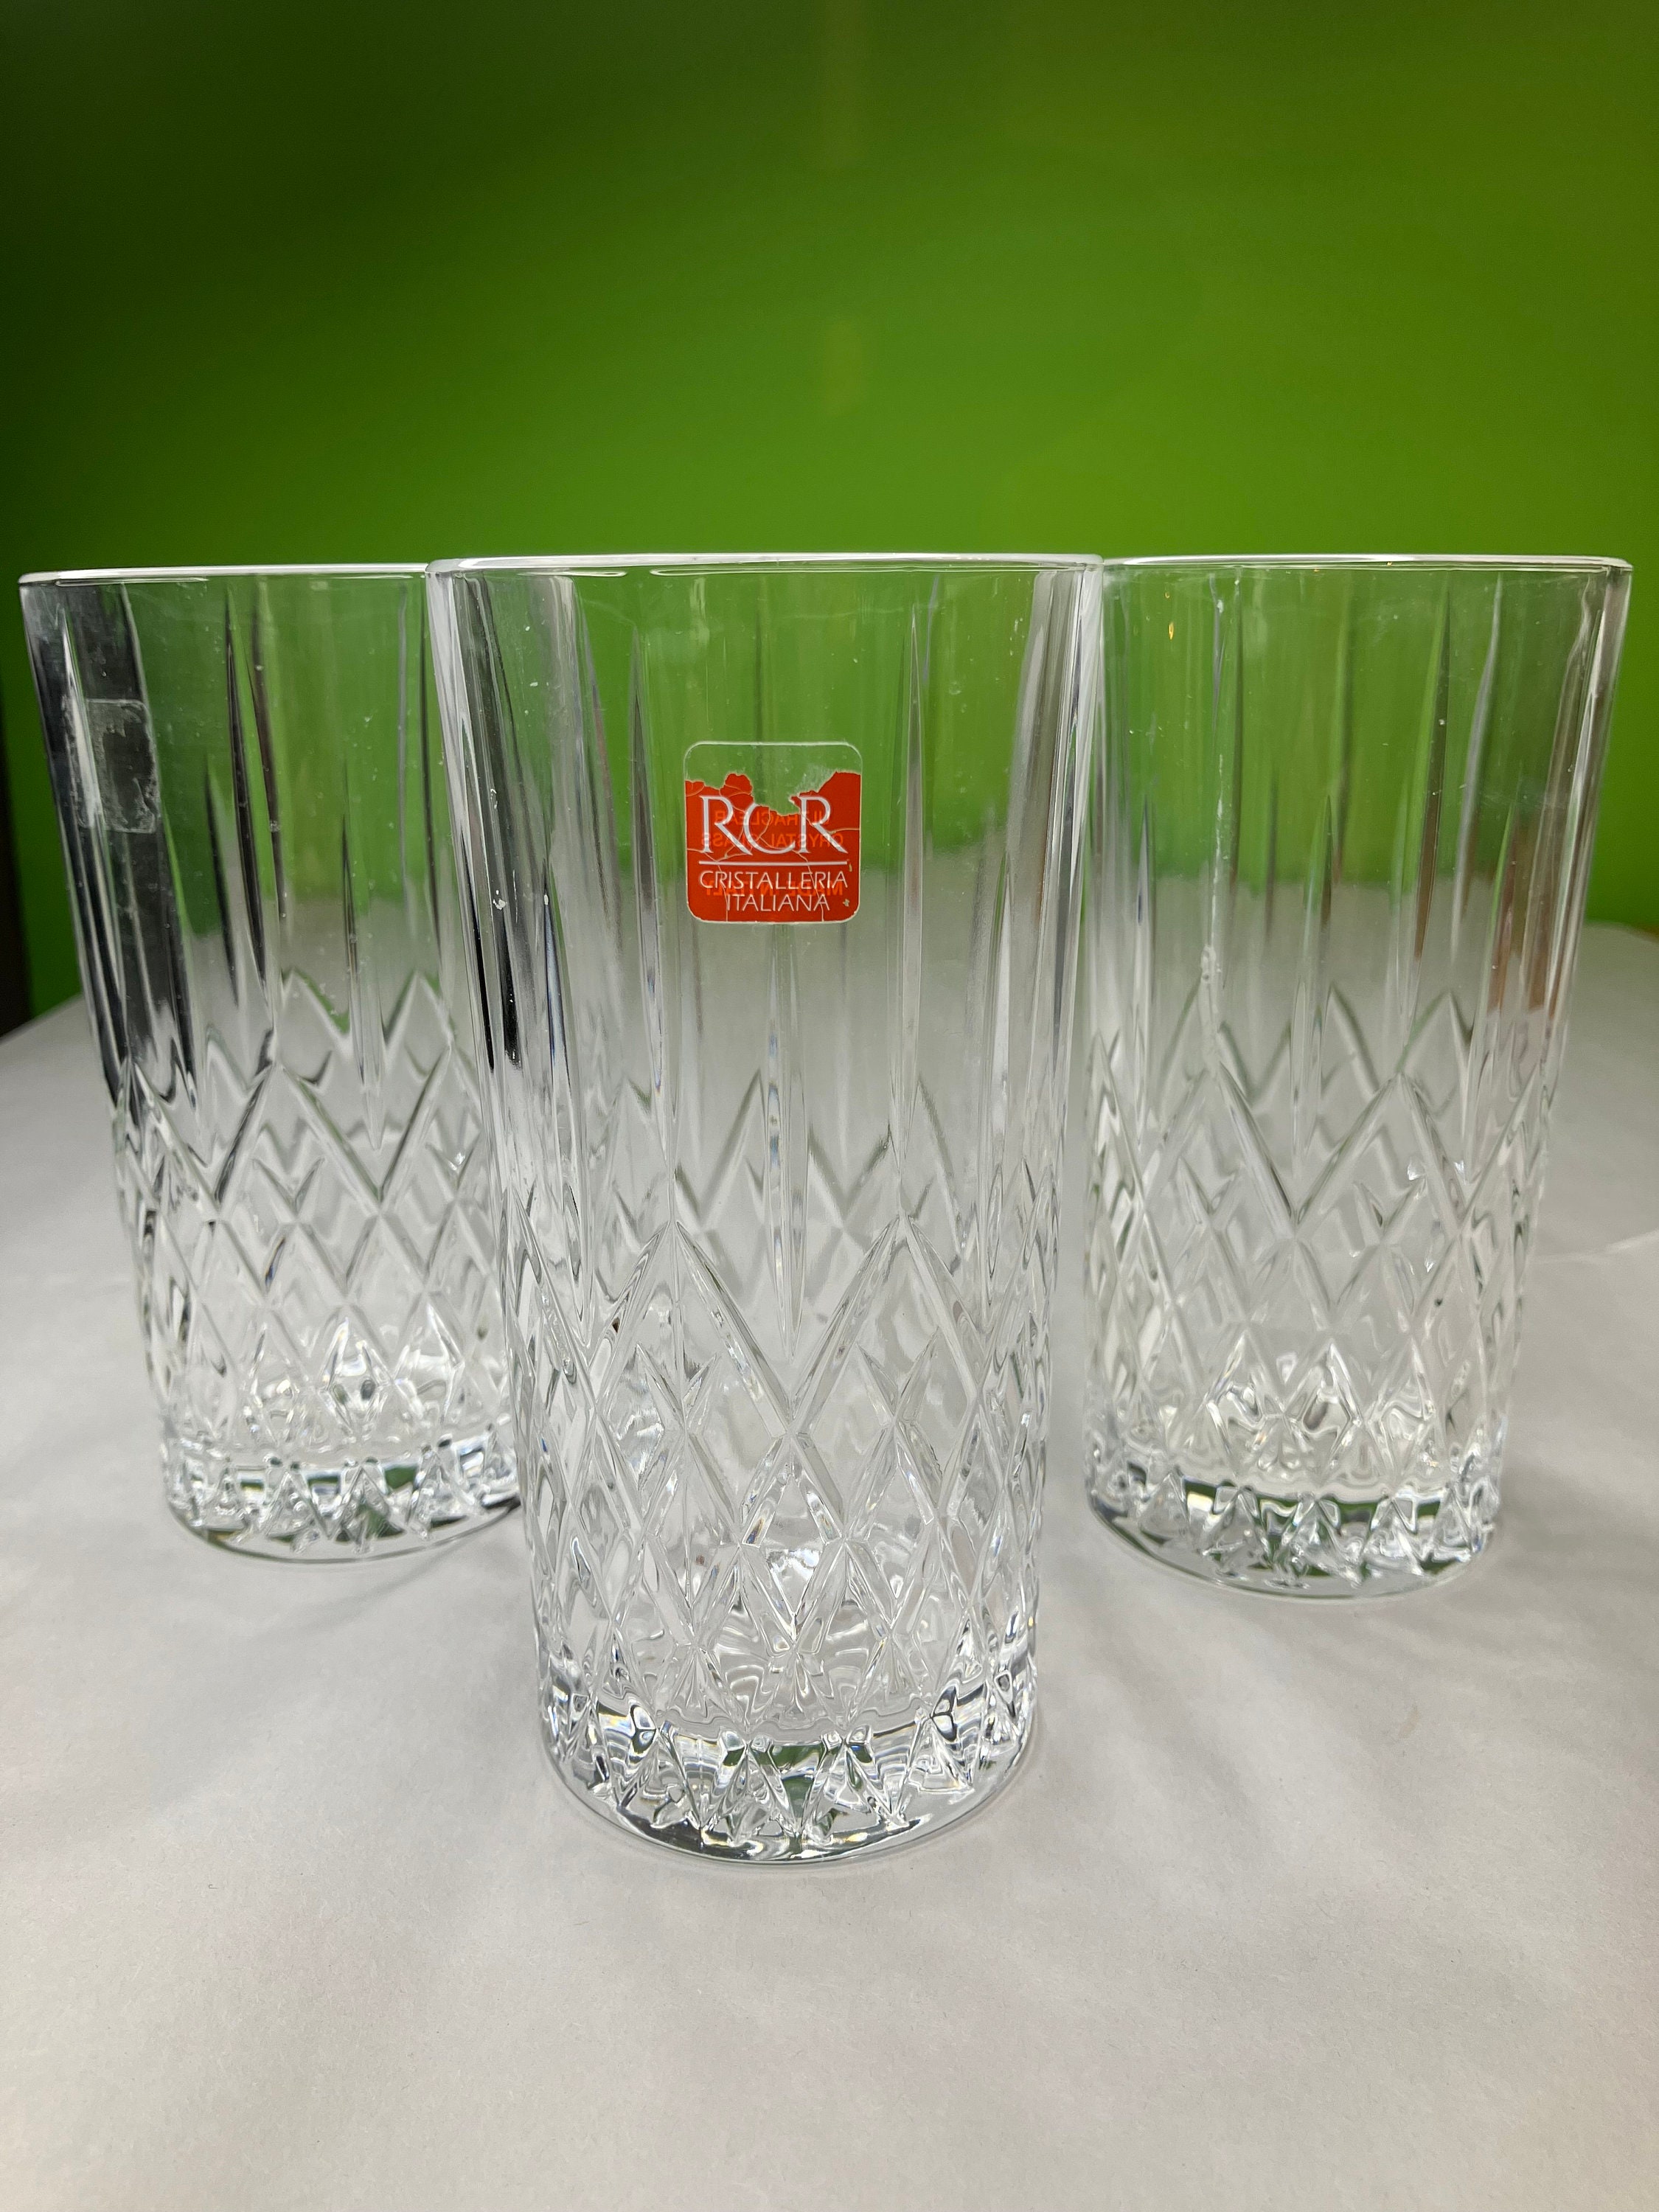 RCR Trix Crystal Highball Glass set of 6